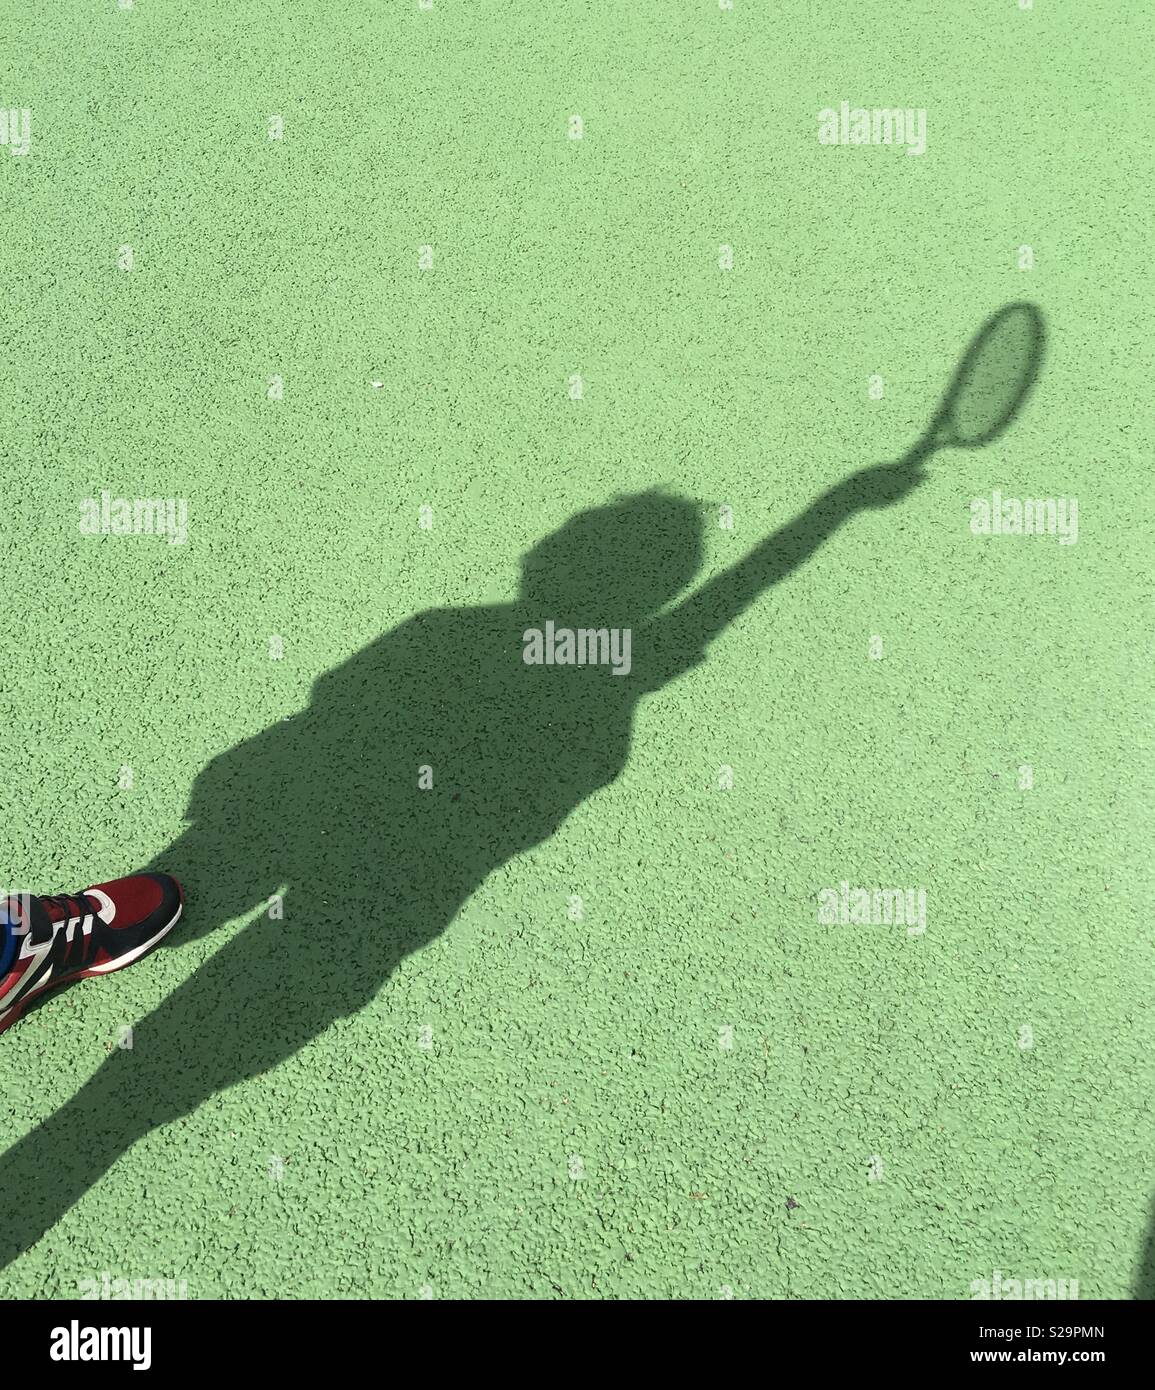 Tennis player shadow Stock Photo